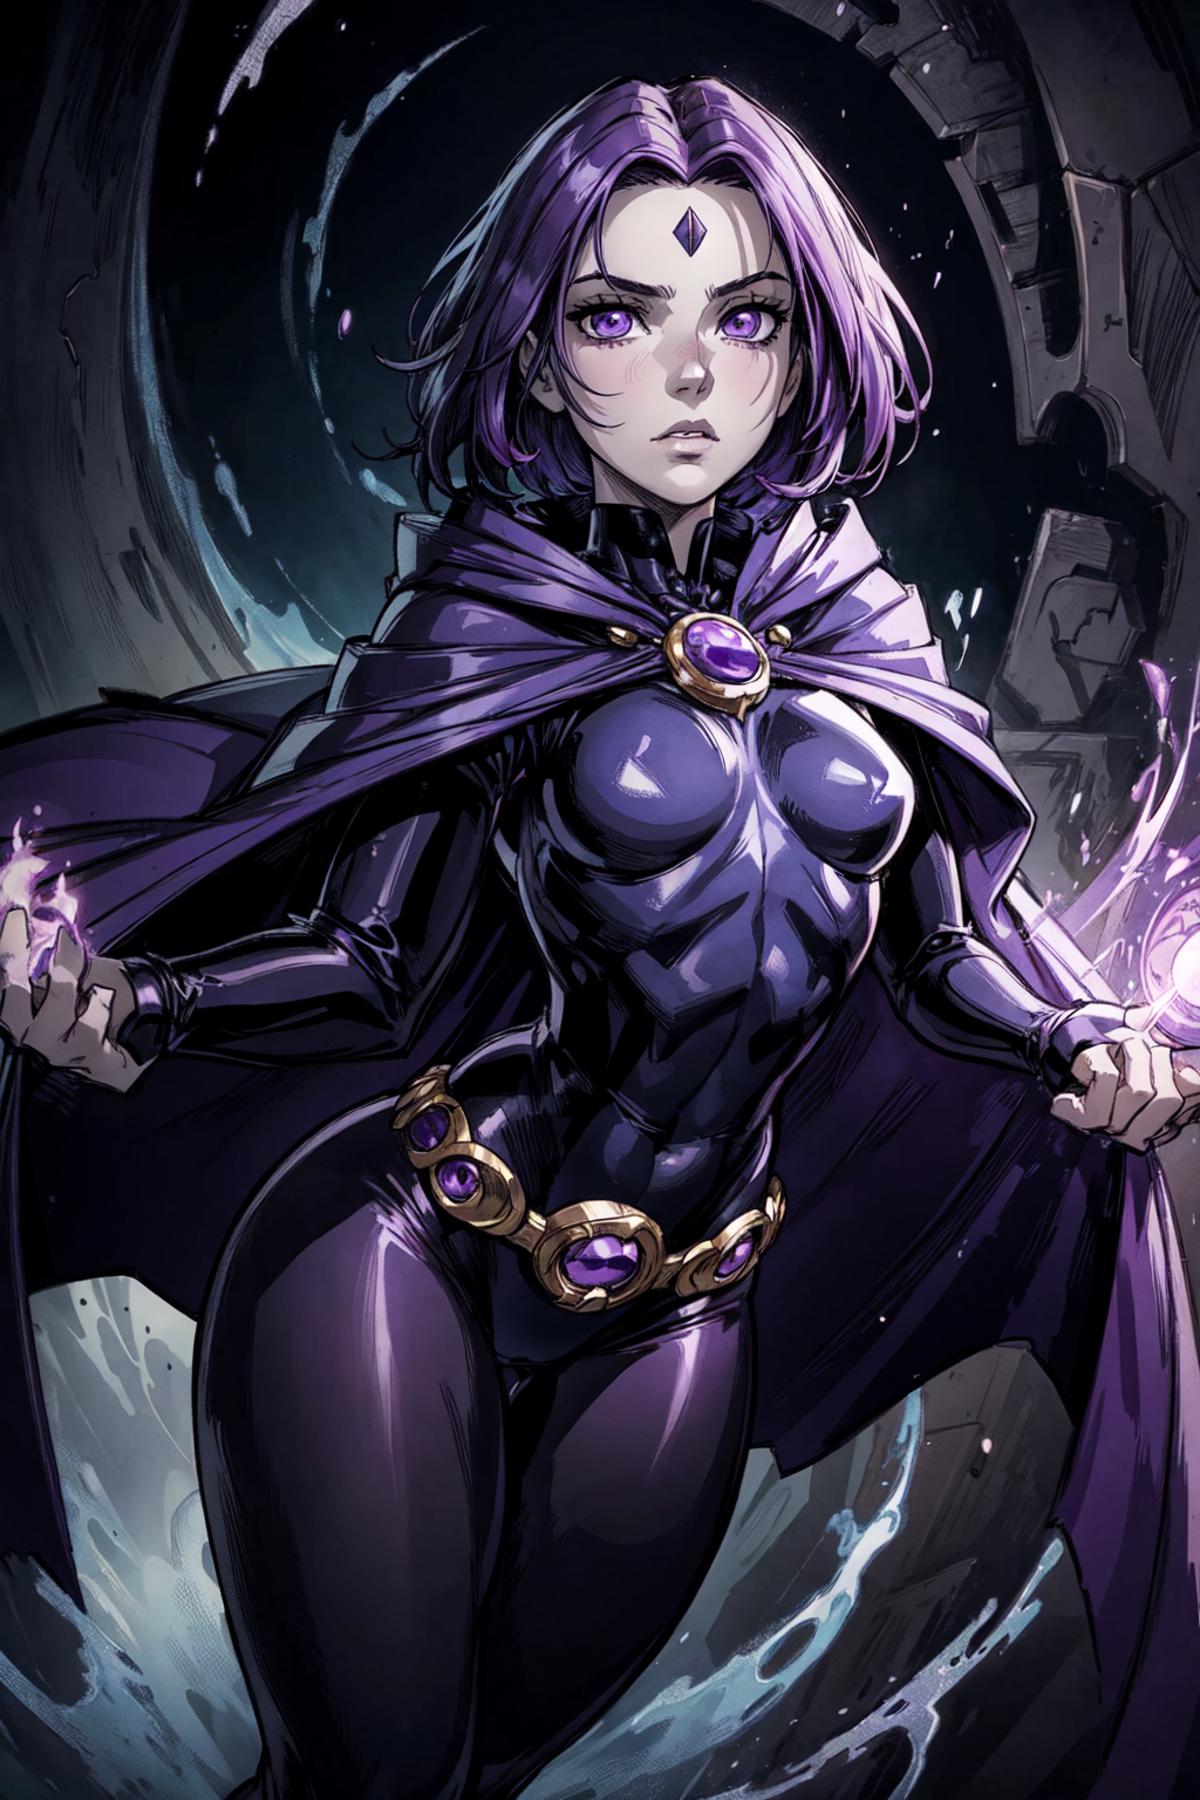 Raven (Teen Titans) image by Kayako